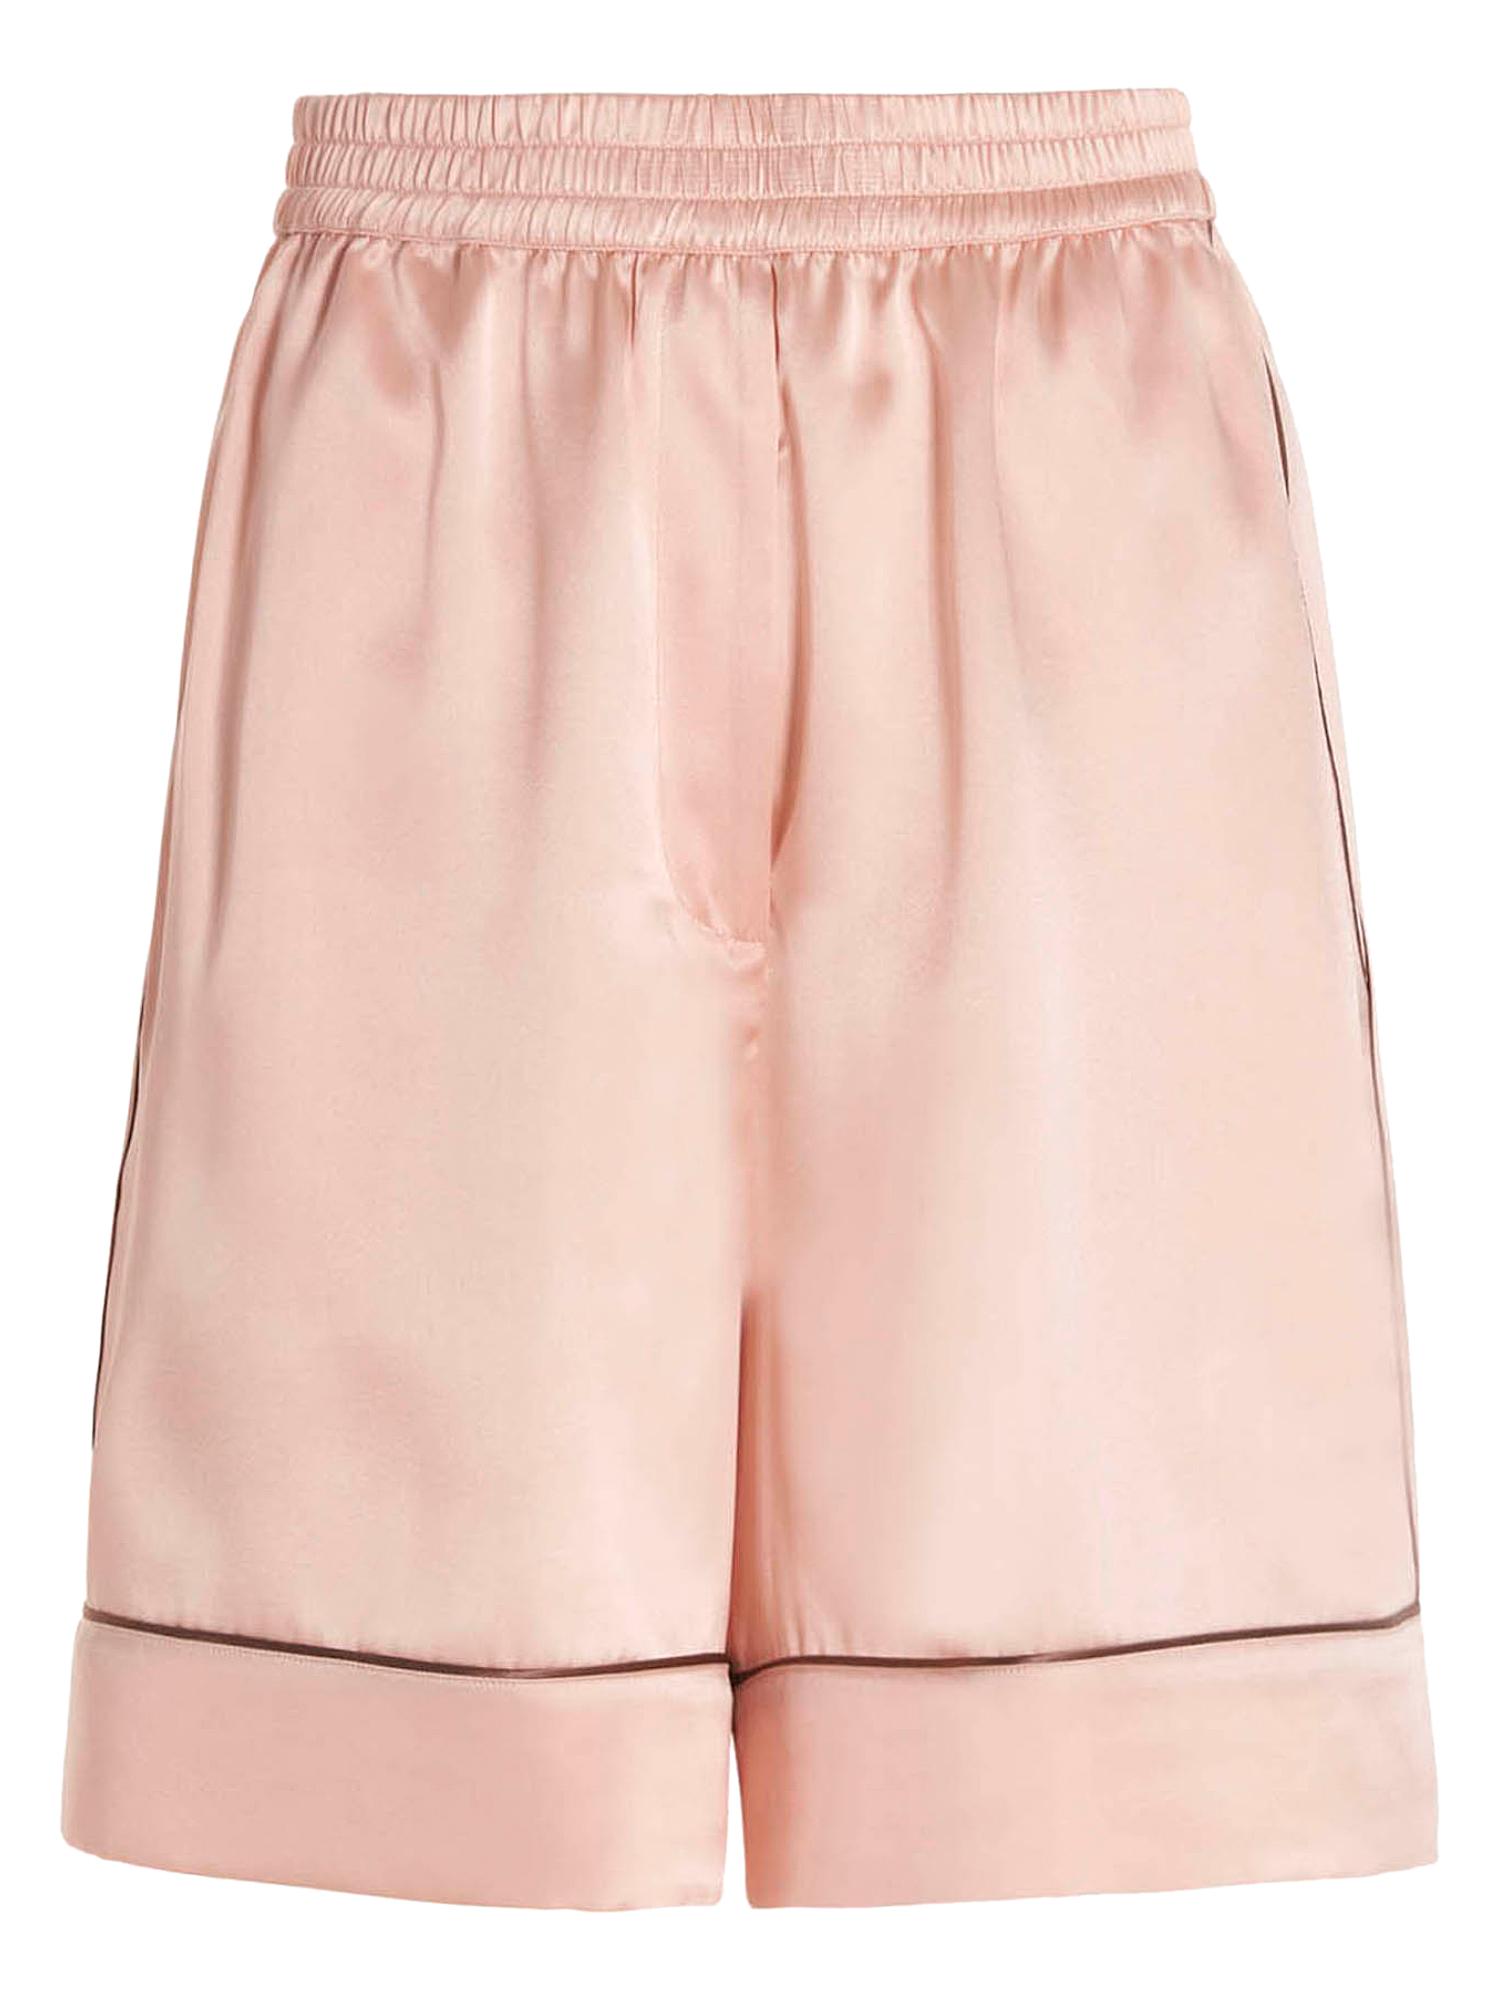 Dolce & Gabbana Silk Trousers in Pink | Lyst